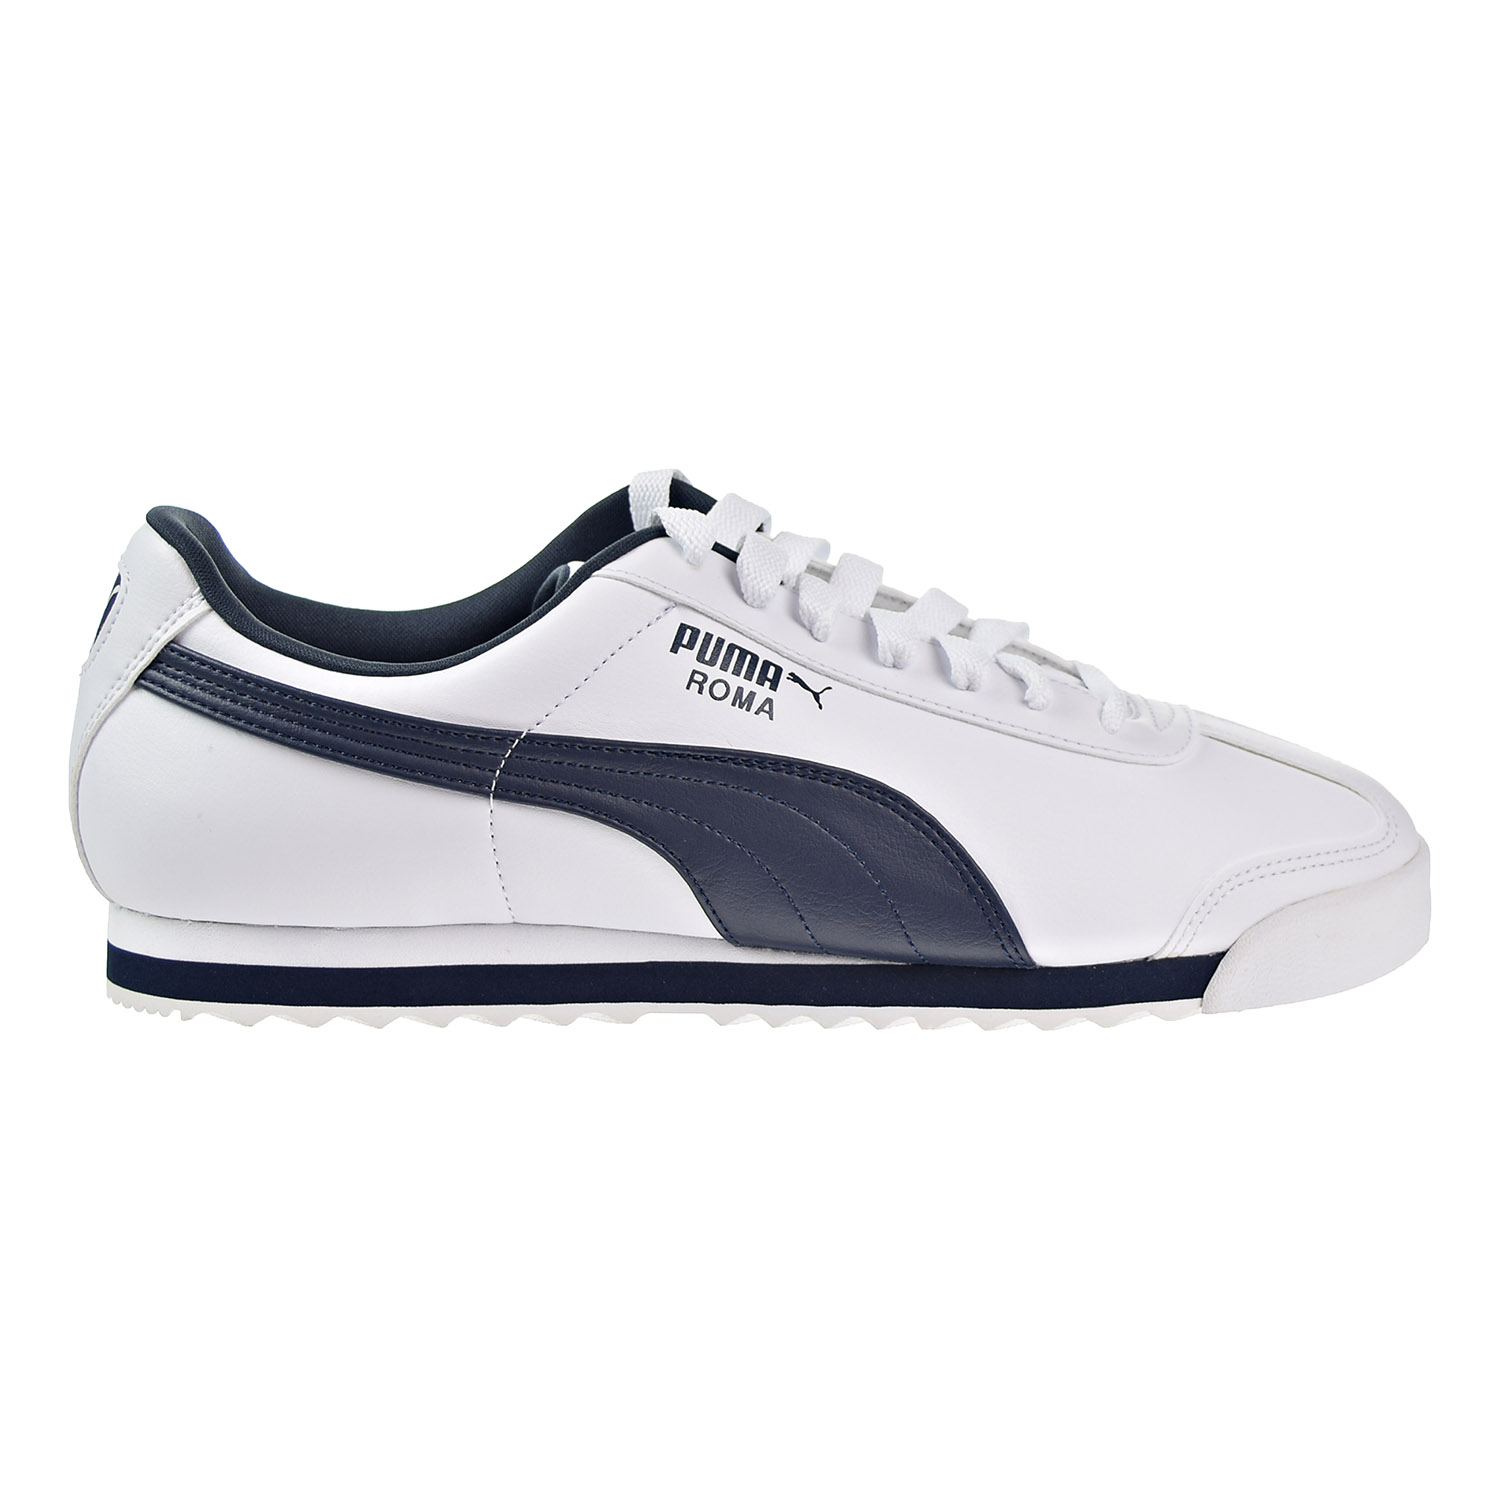 Puma Roma Basic Men's Shoes White/New Navy 353572-12 (11.5 D(M) US)